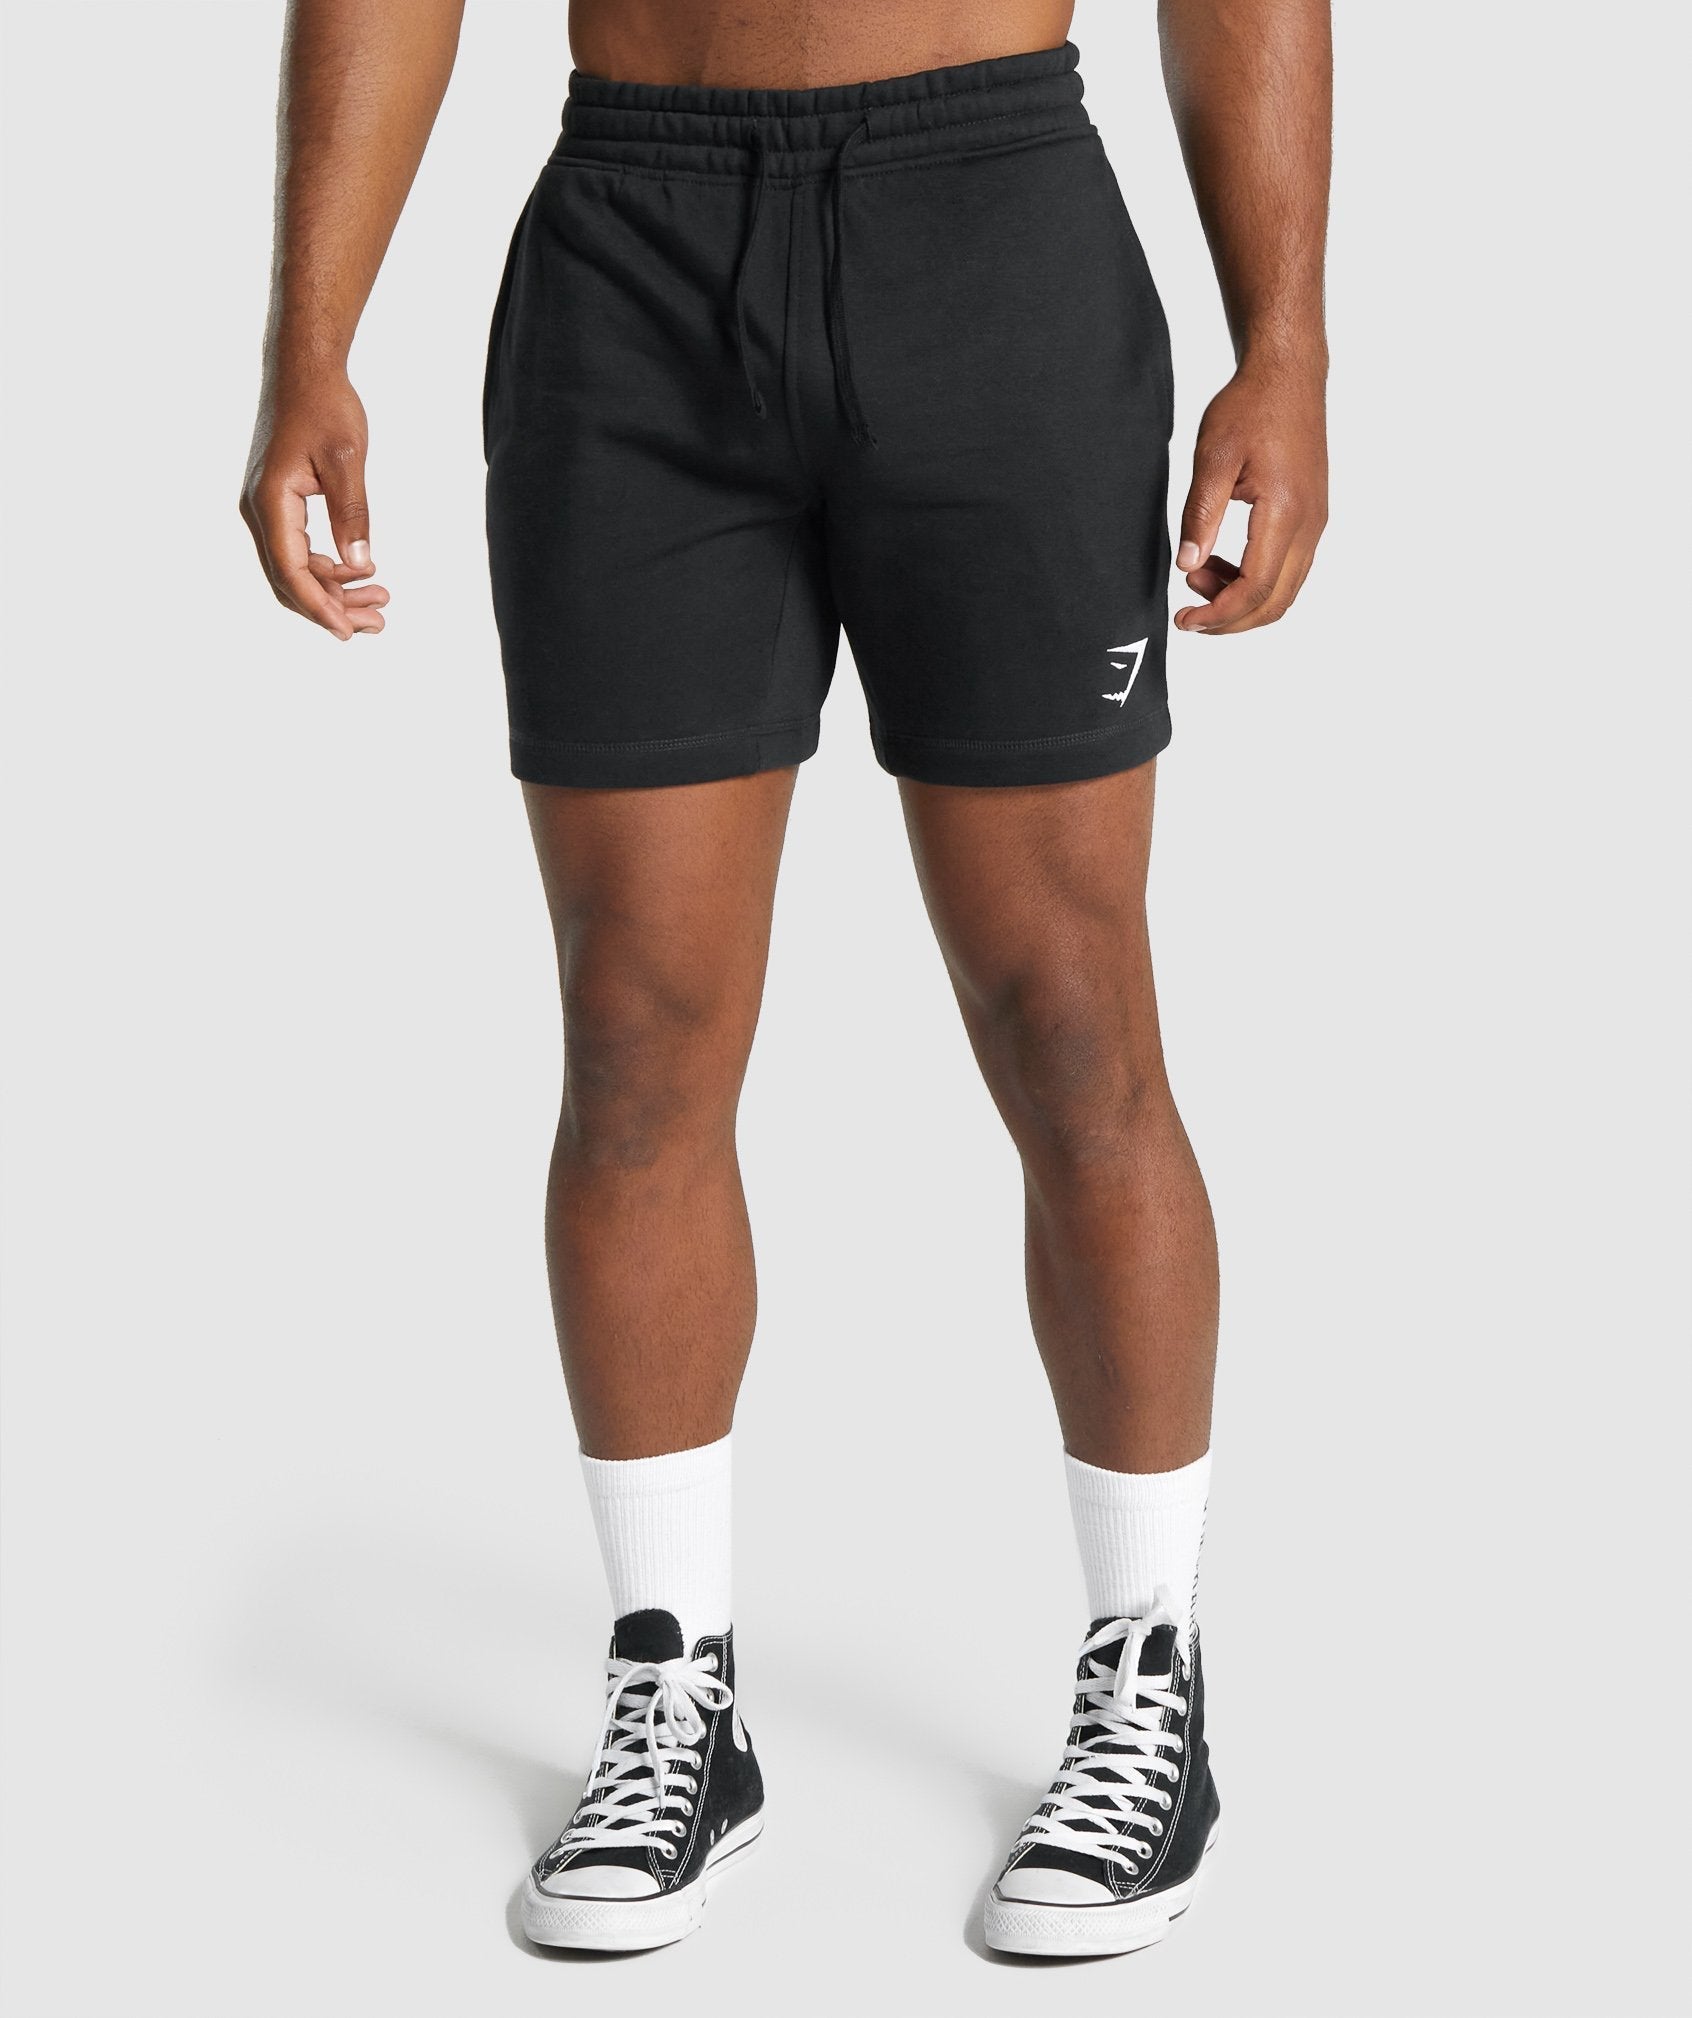 Gymshark Rest Day Sweats Shorts - Black Core Marl